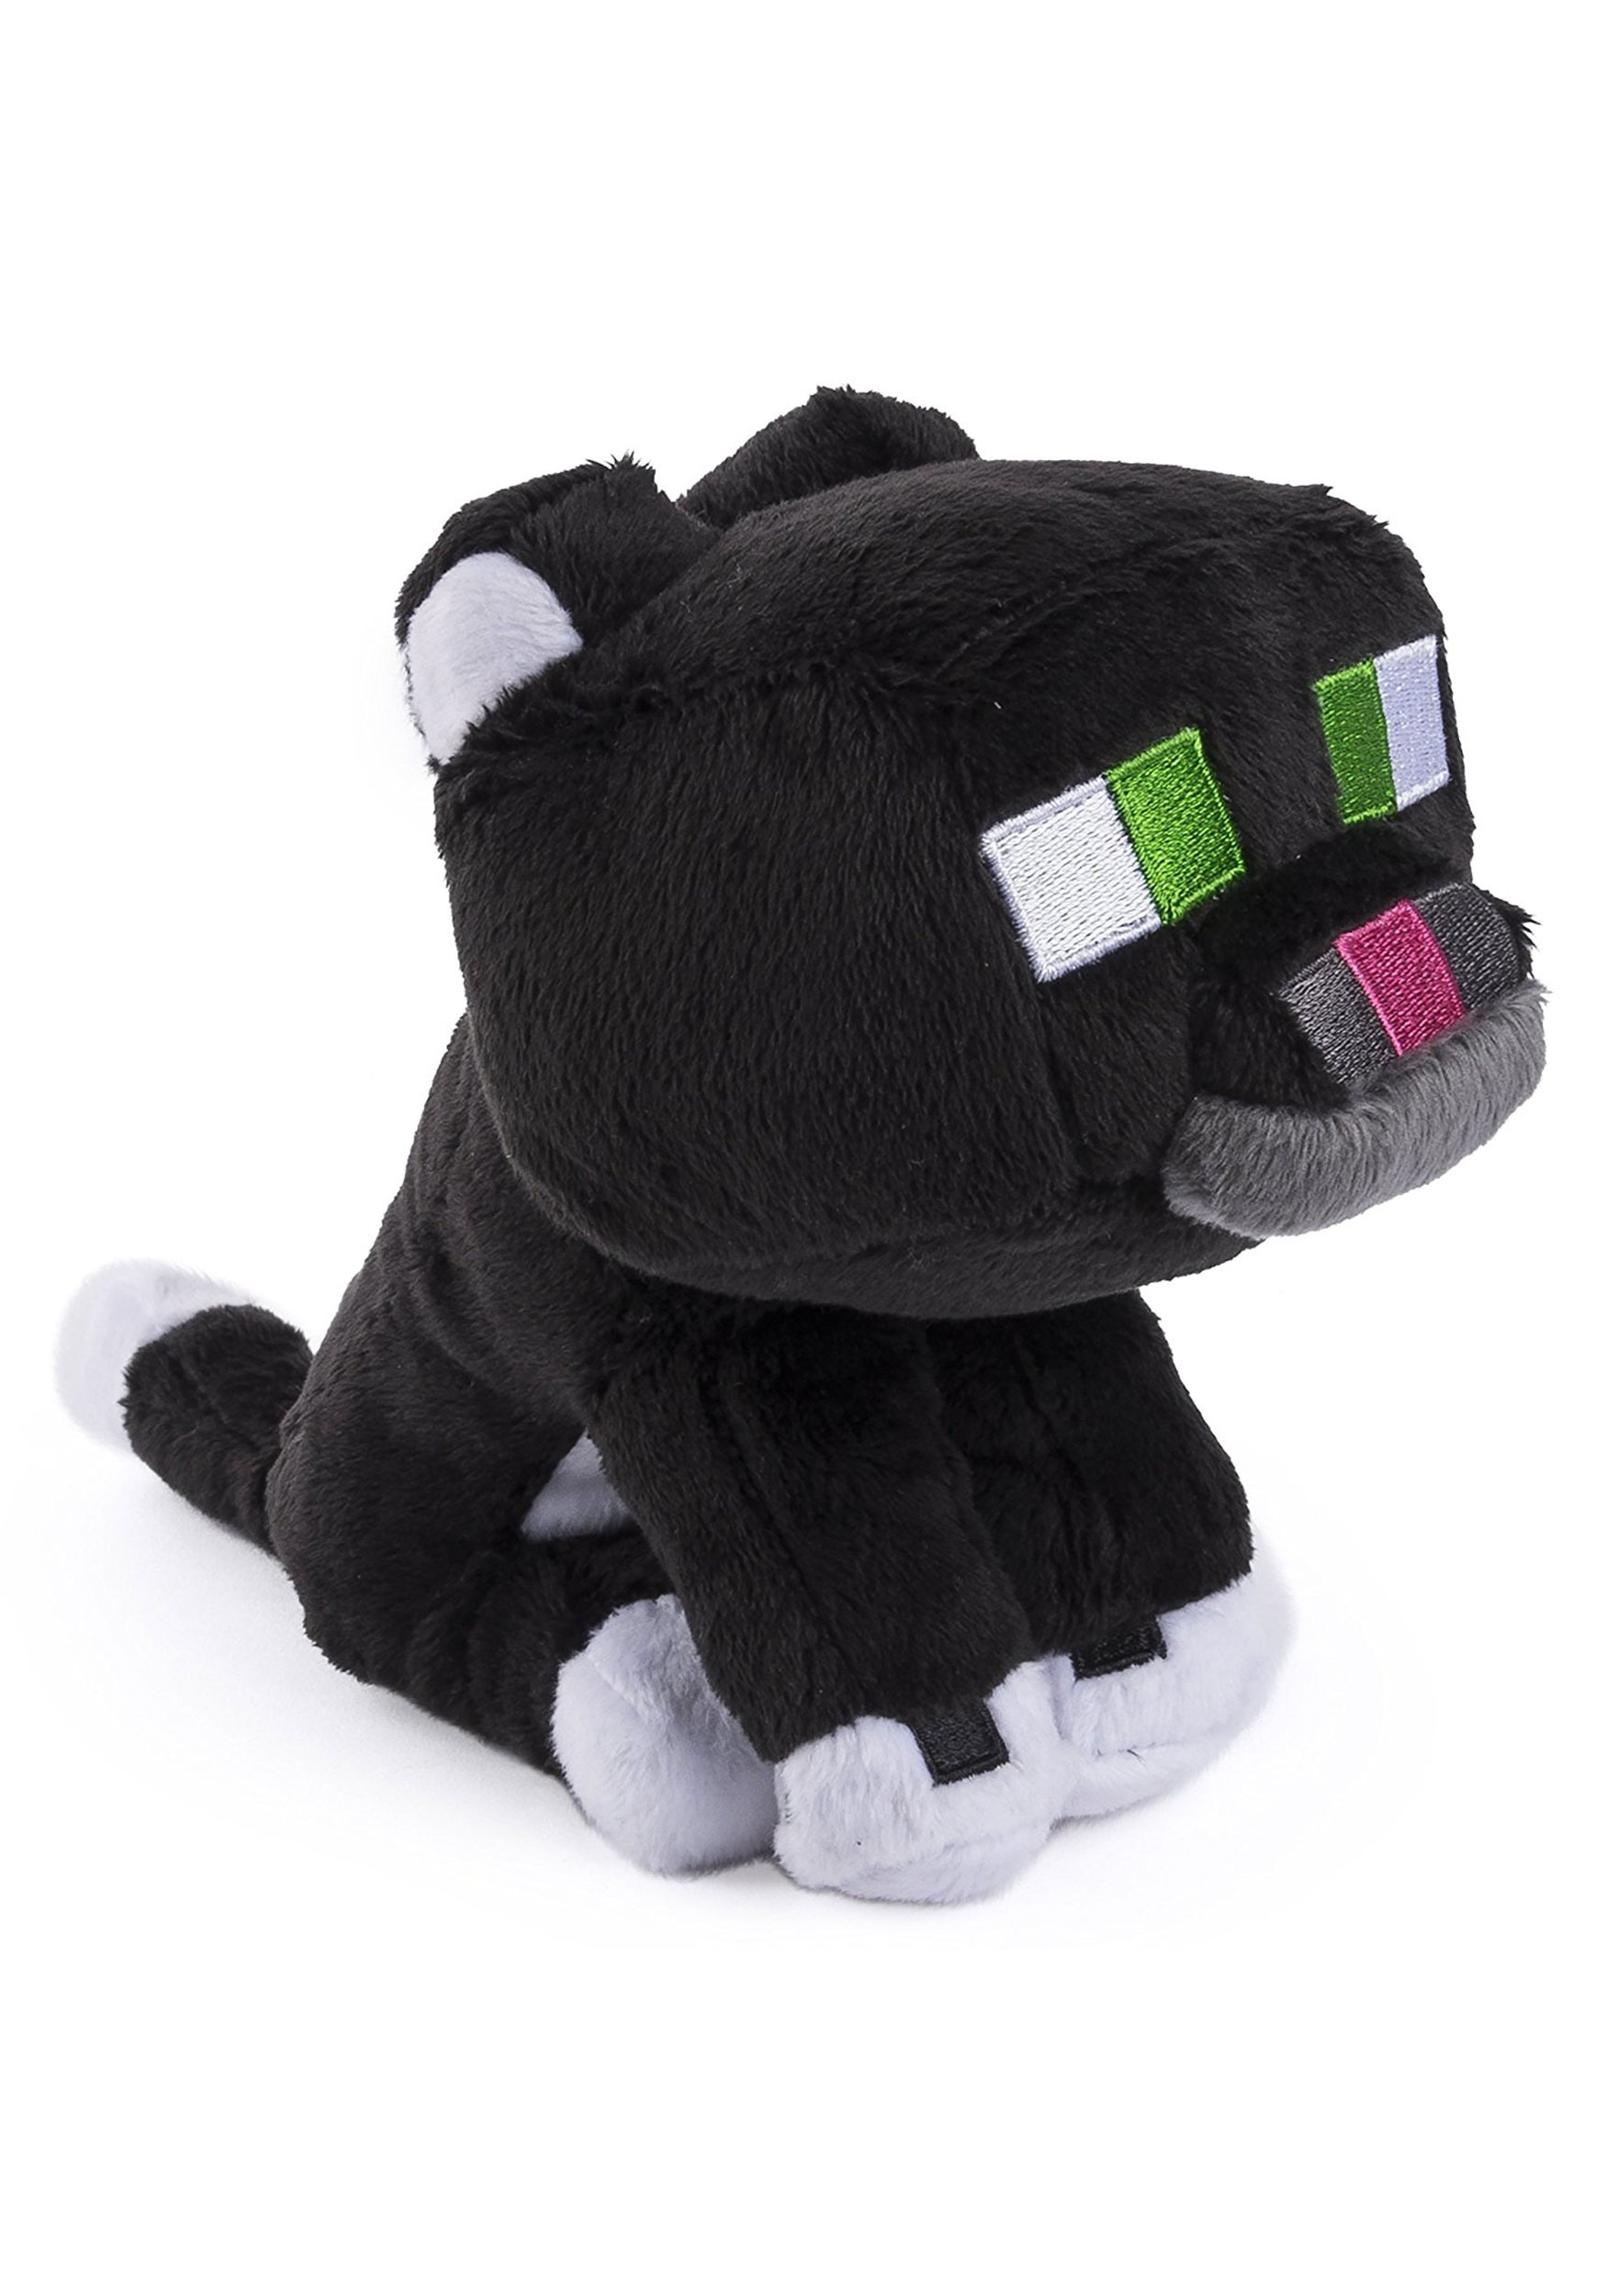 minecraft cat stuffed animal